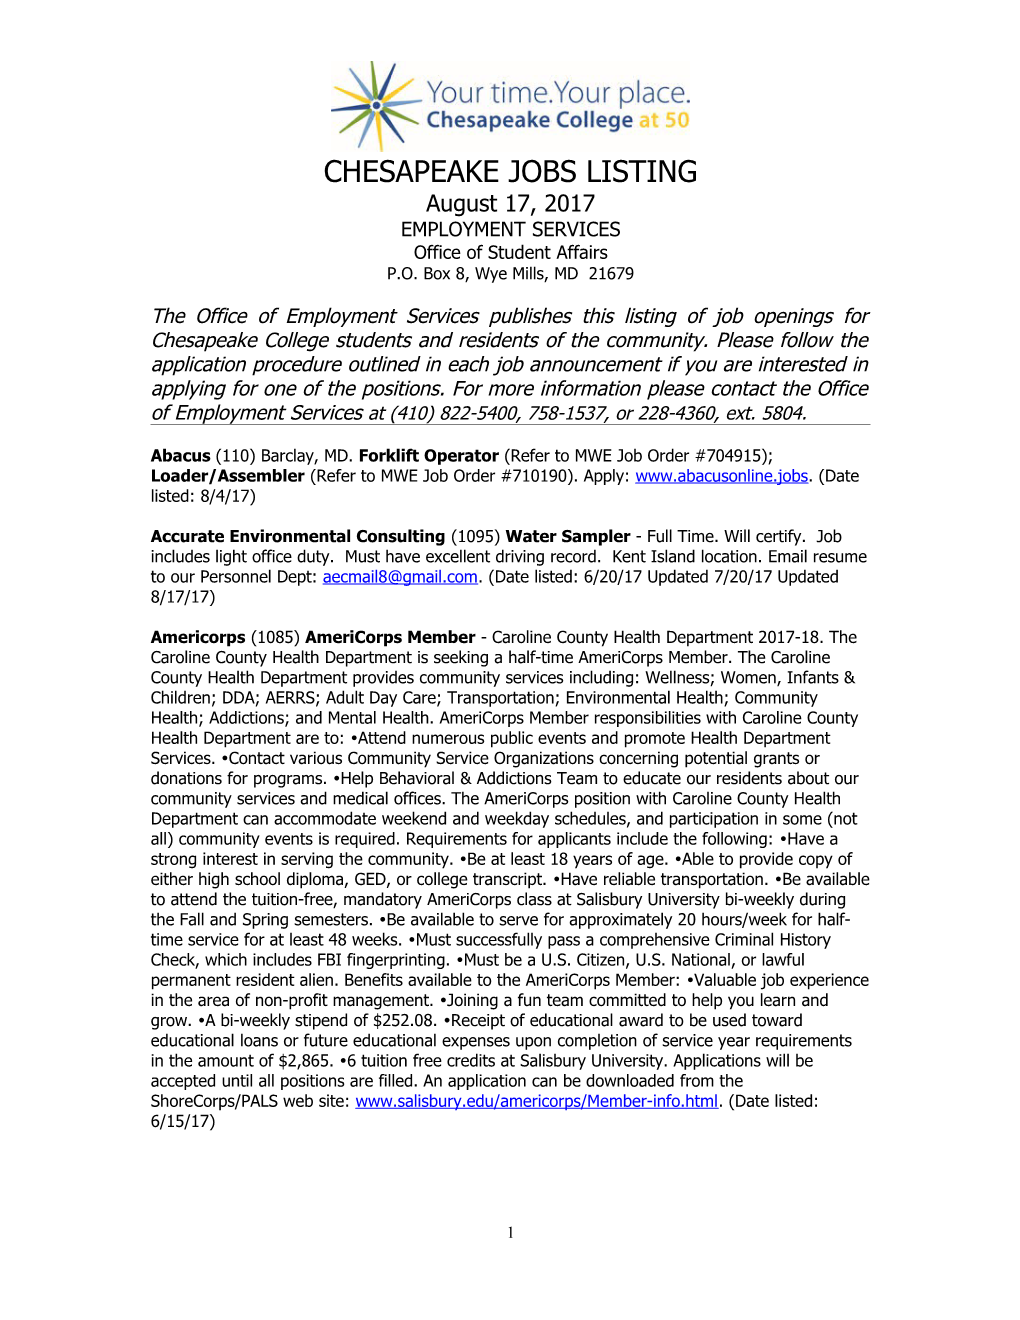 Chesapeake Jobs Listing s1